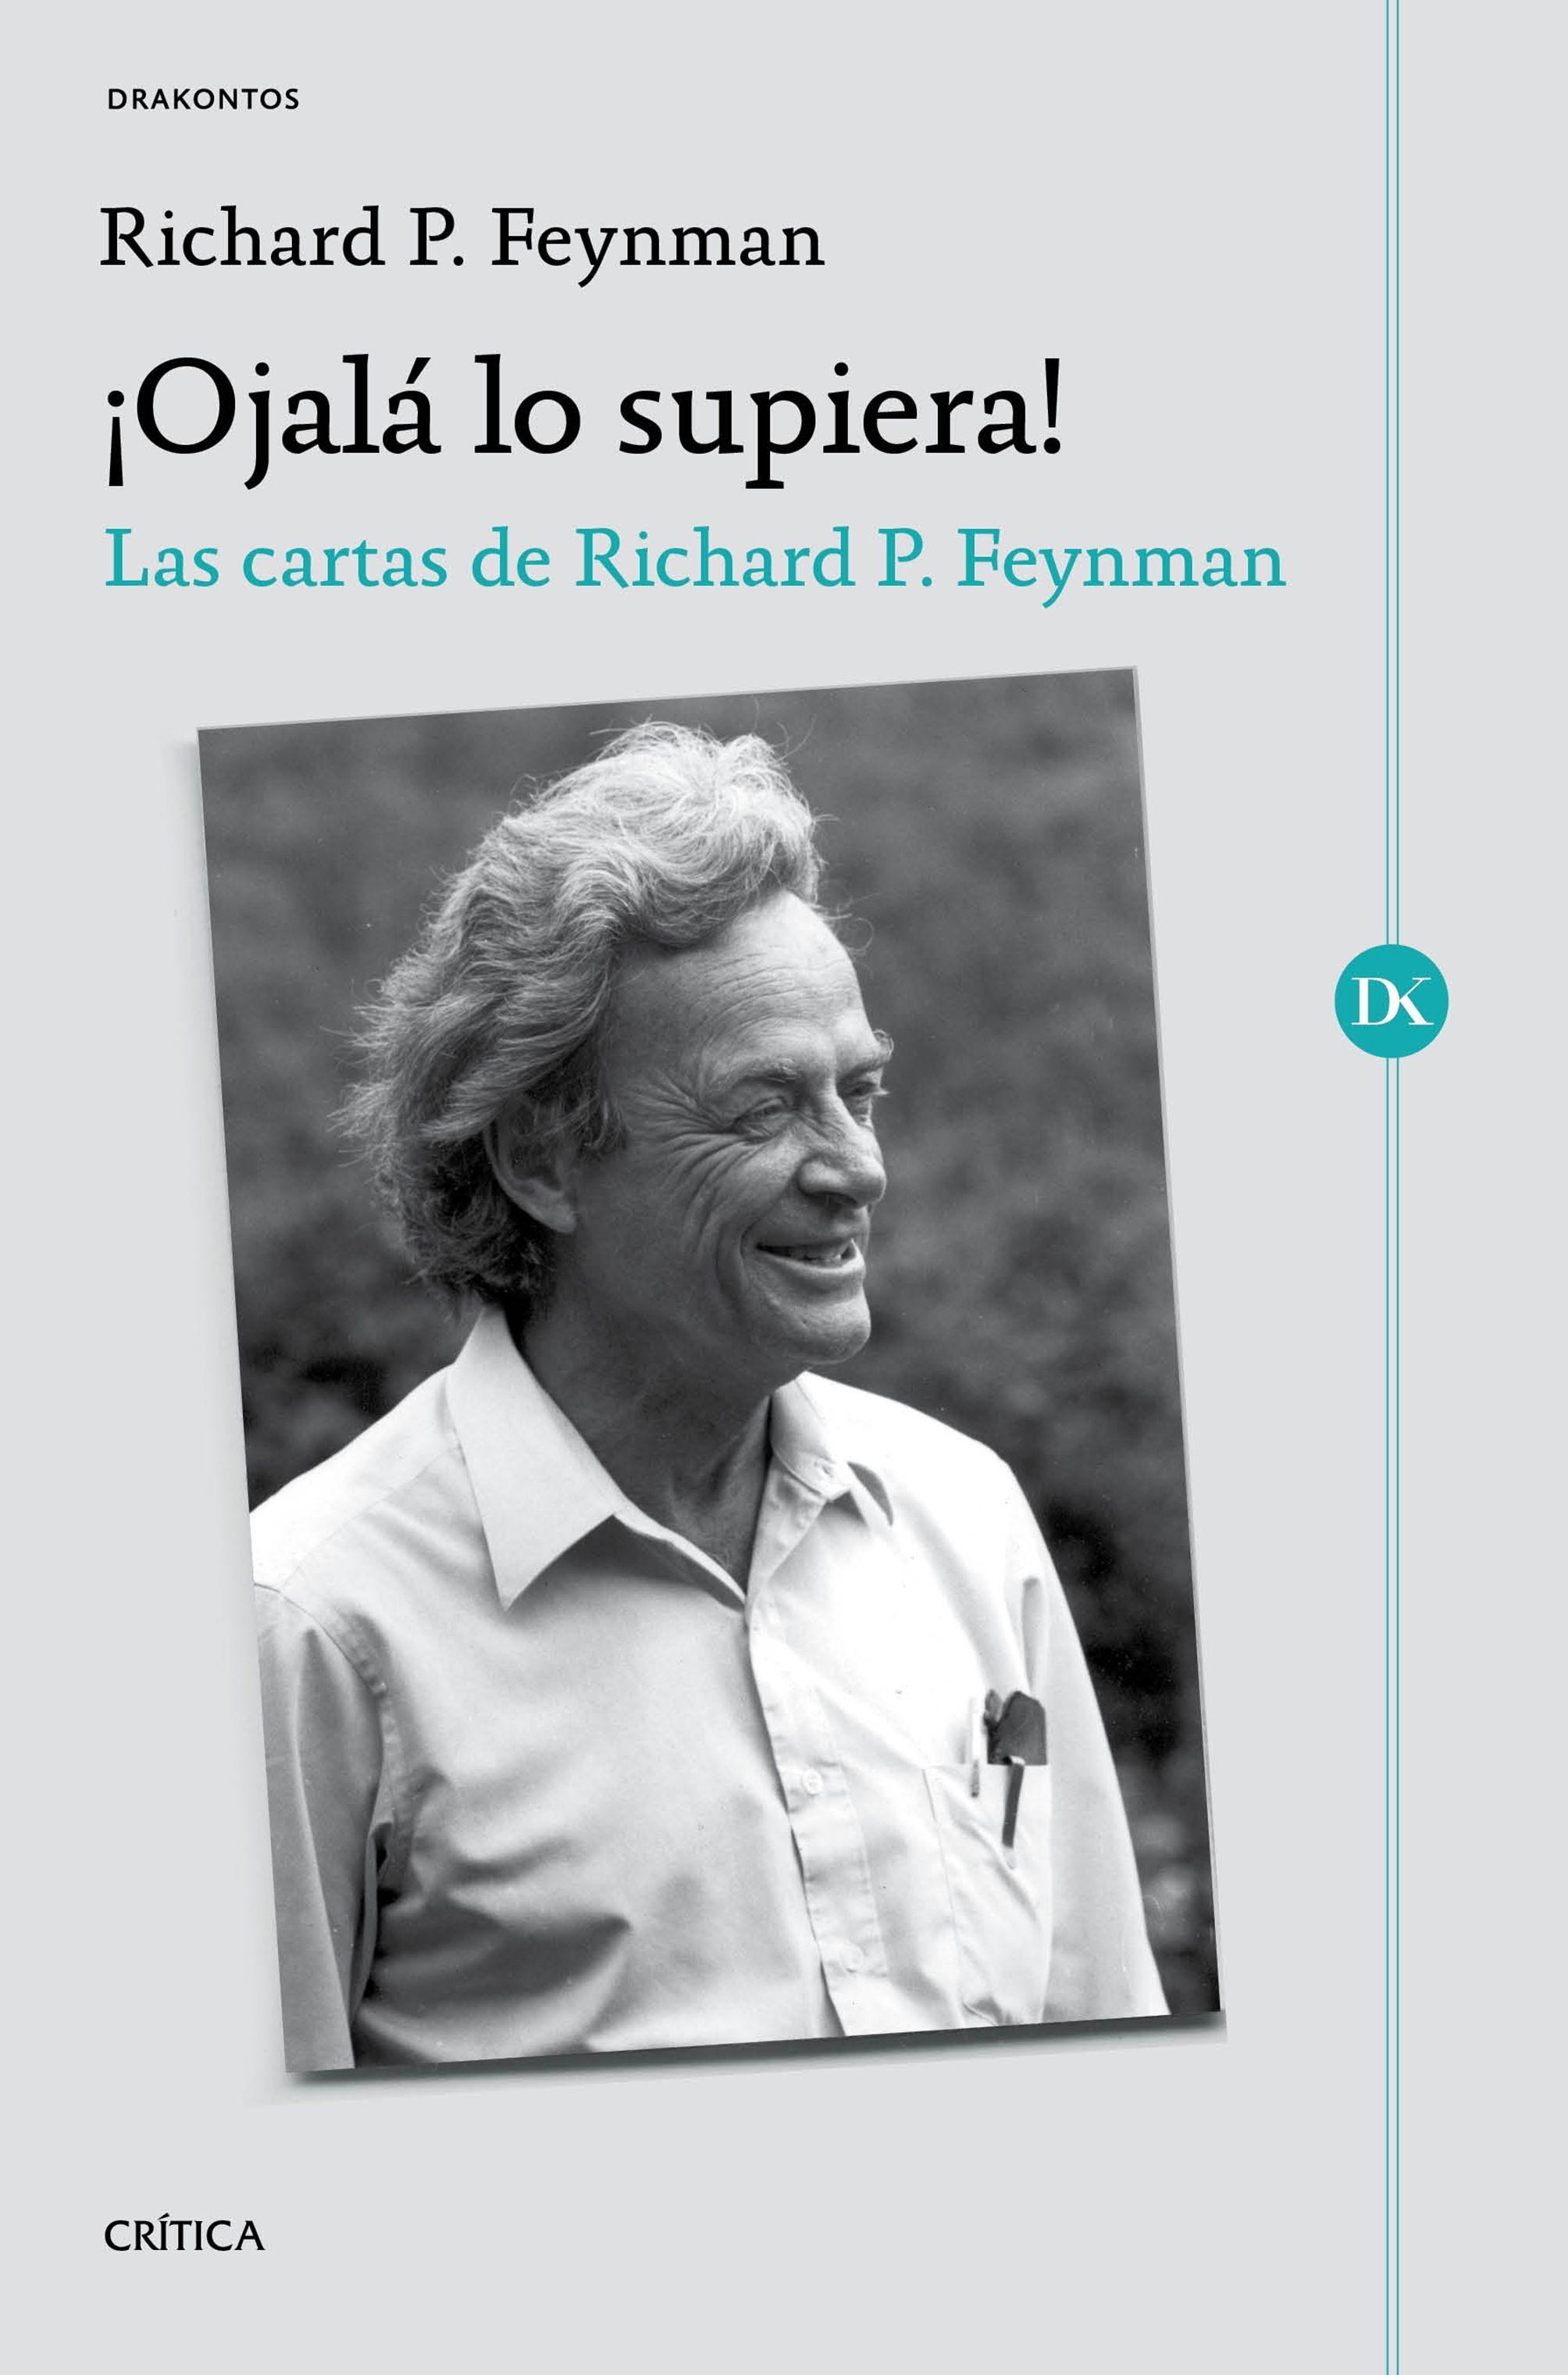 ¡Ojalá lo supiera! "Las cartas de Richard P. Feynman"